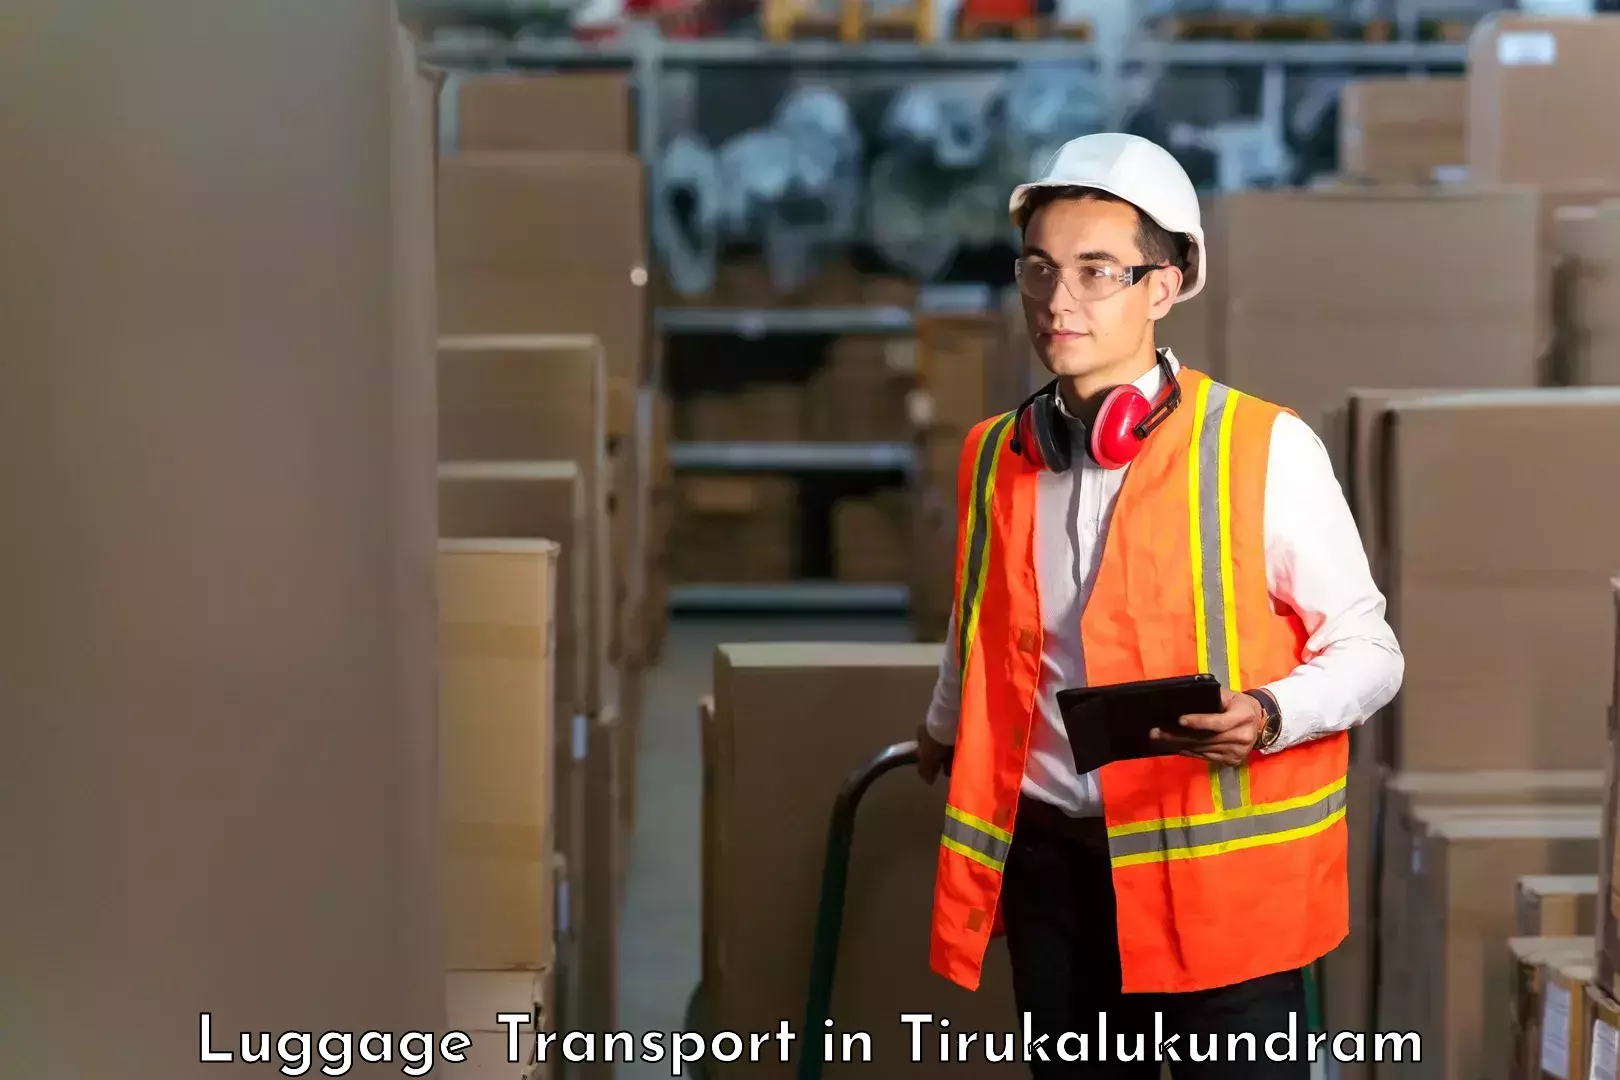 Luggage transport pricing in Tirukalukundram